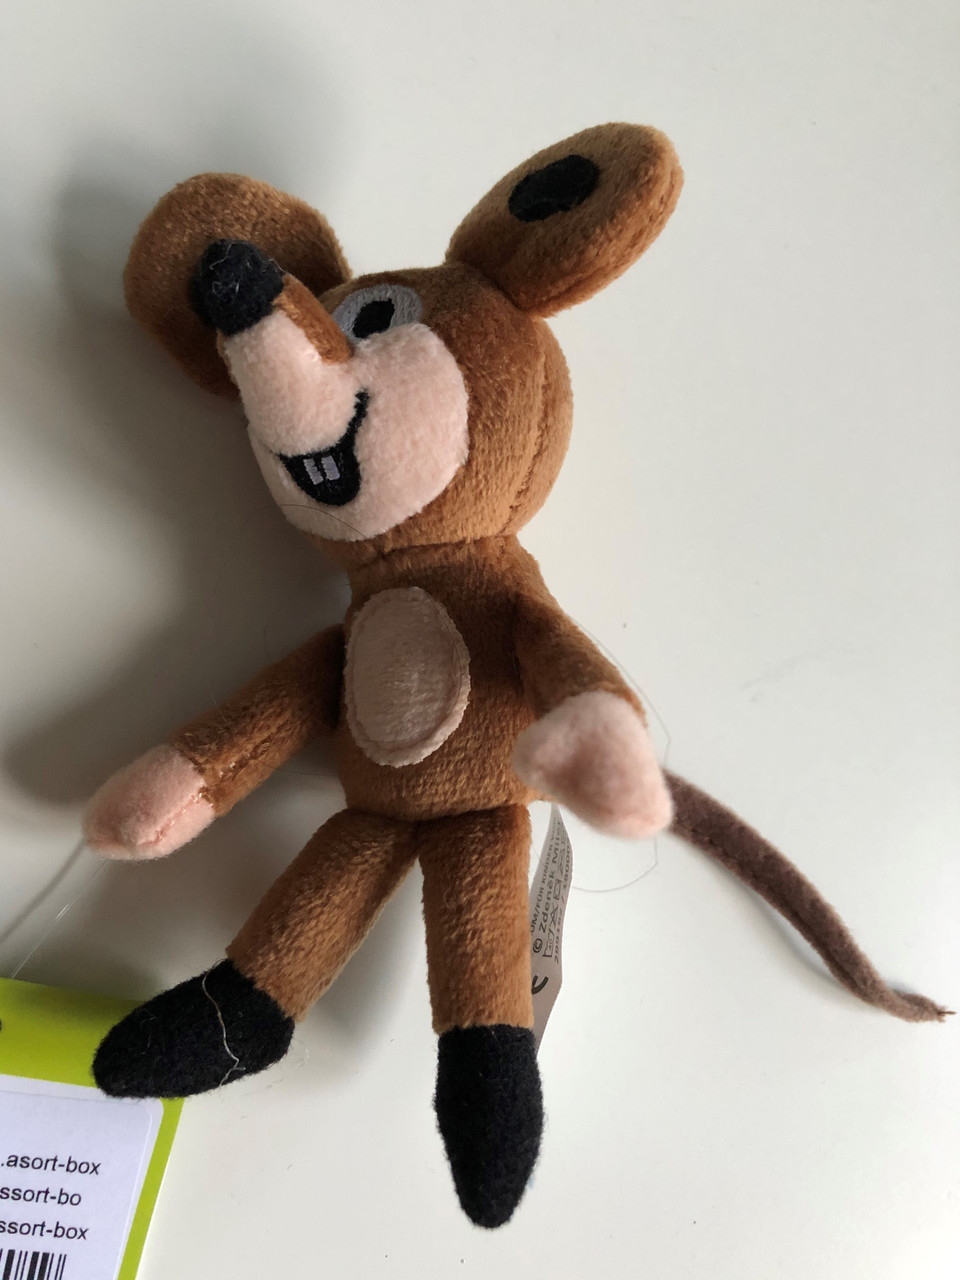 Little Mole and his friends - mouse finger puppet / Krtek a kamarádi - Miška  - Maulwurf und Freunde / Kisvakond és barátai - Egér ujjbáb / Krteček / Age  0+ - bibleinmylanguage